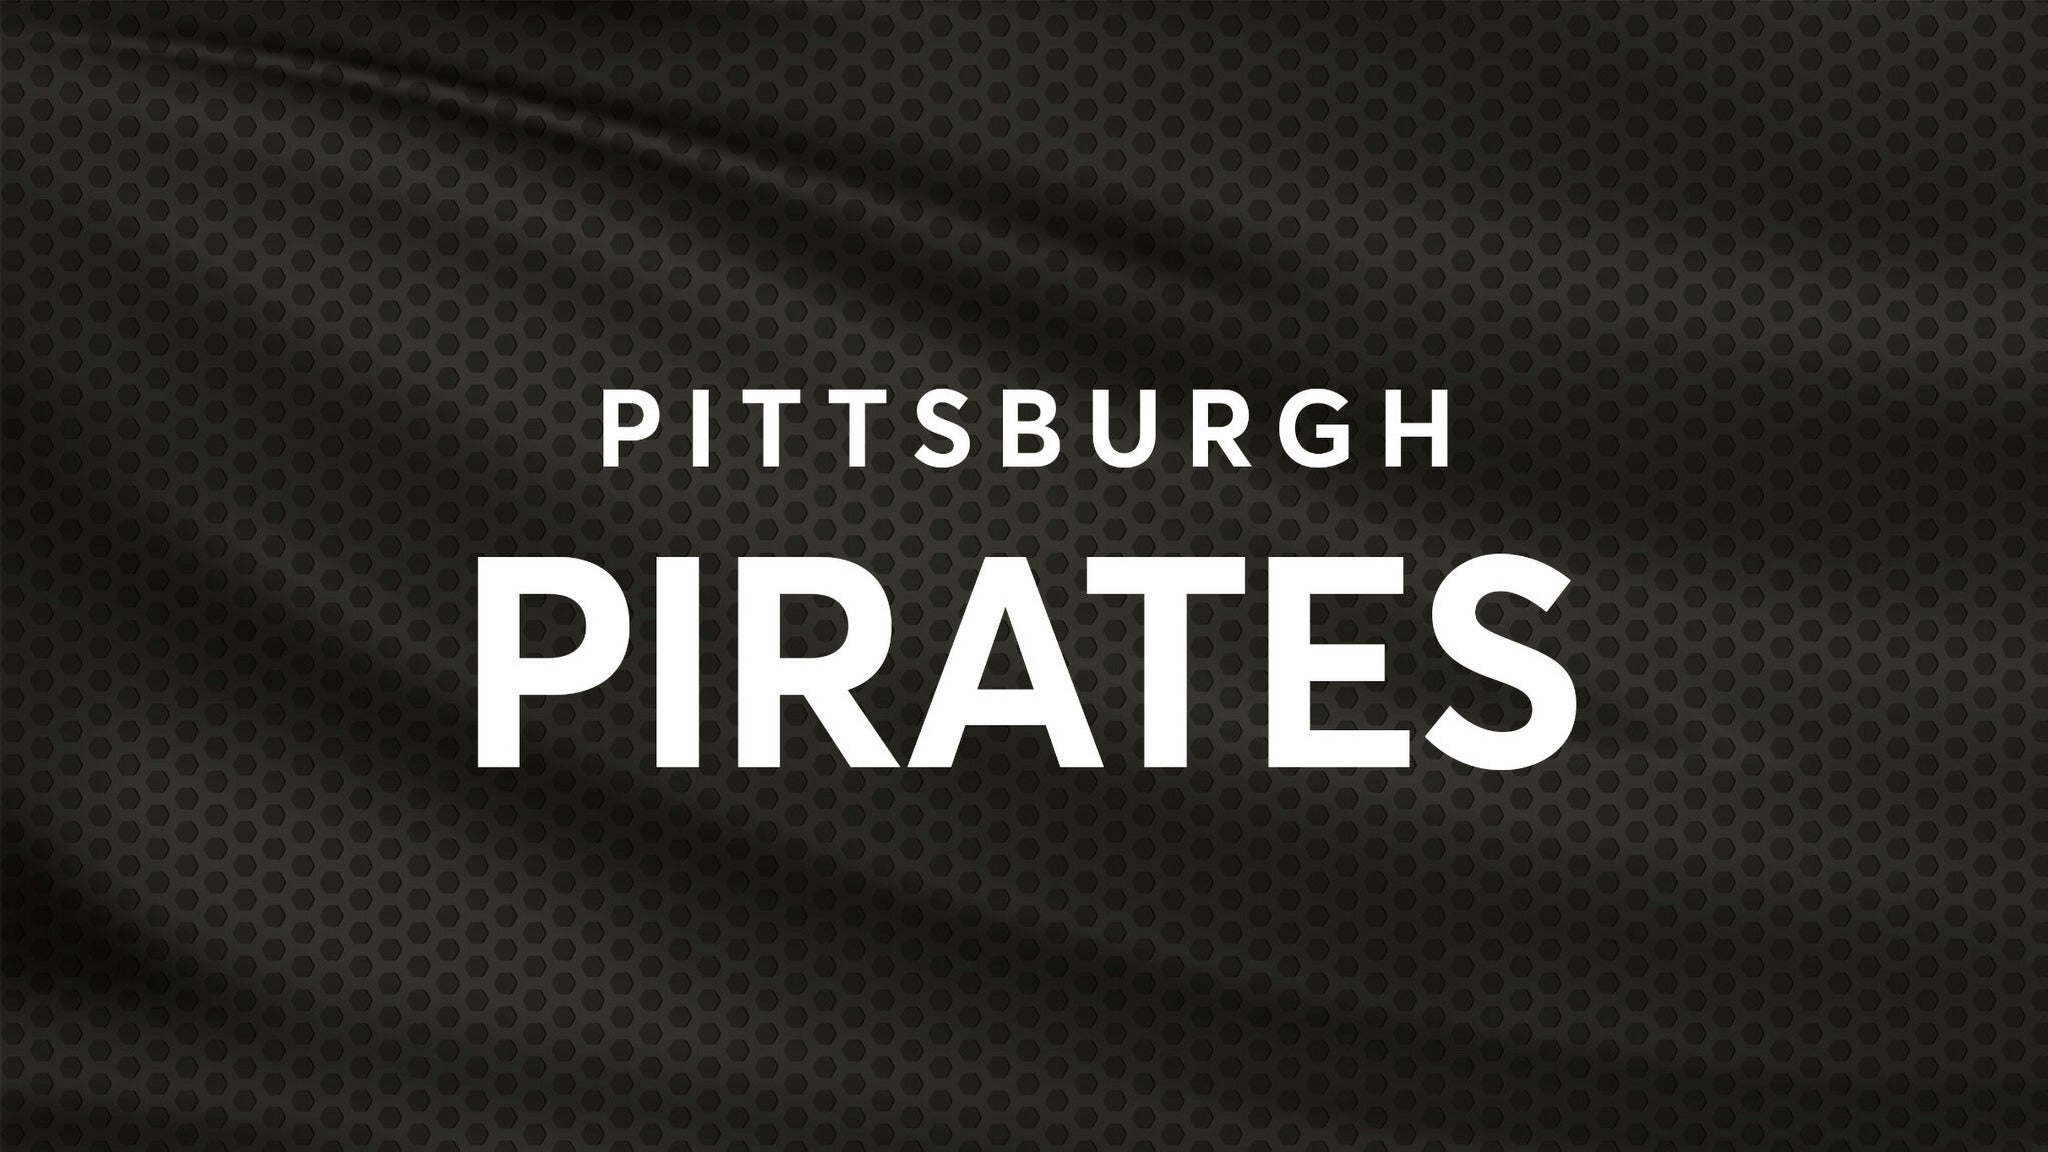 Pittsburgh Pirates vs. Boston Red Sox